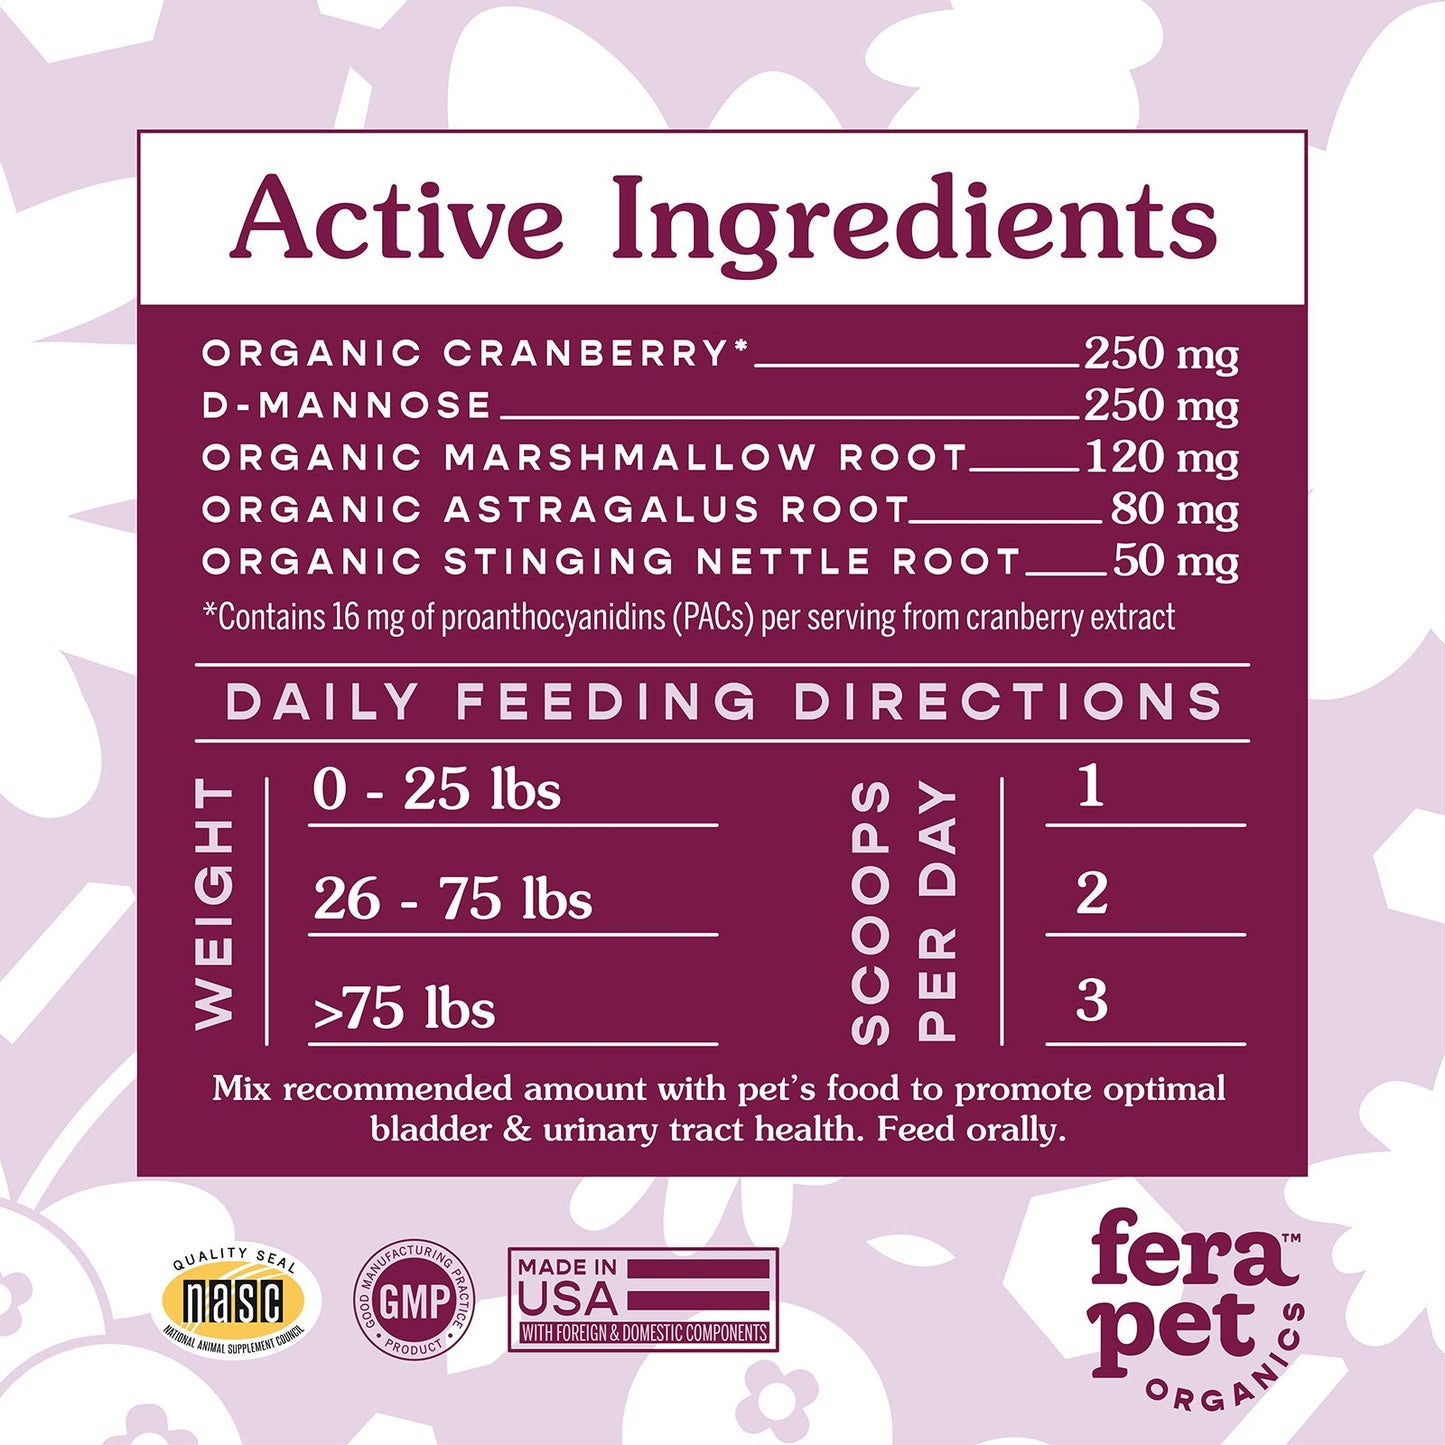 Fera Pet Organics Bladder Support Powder for Dogs & Cats